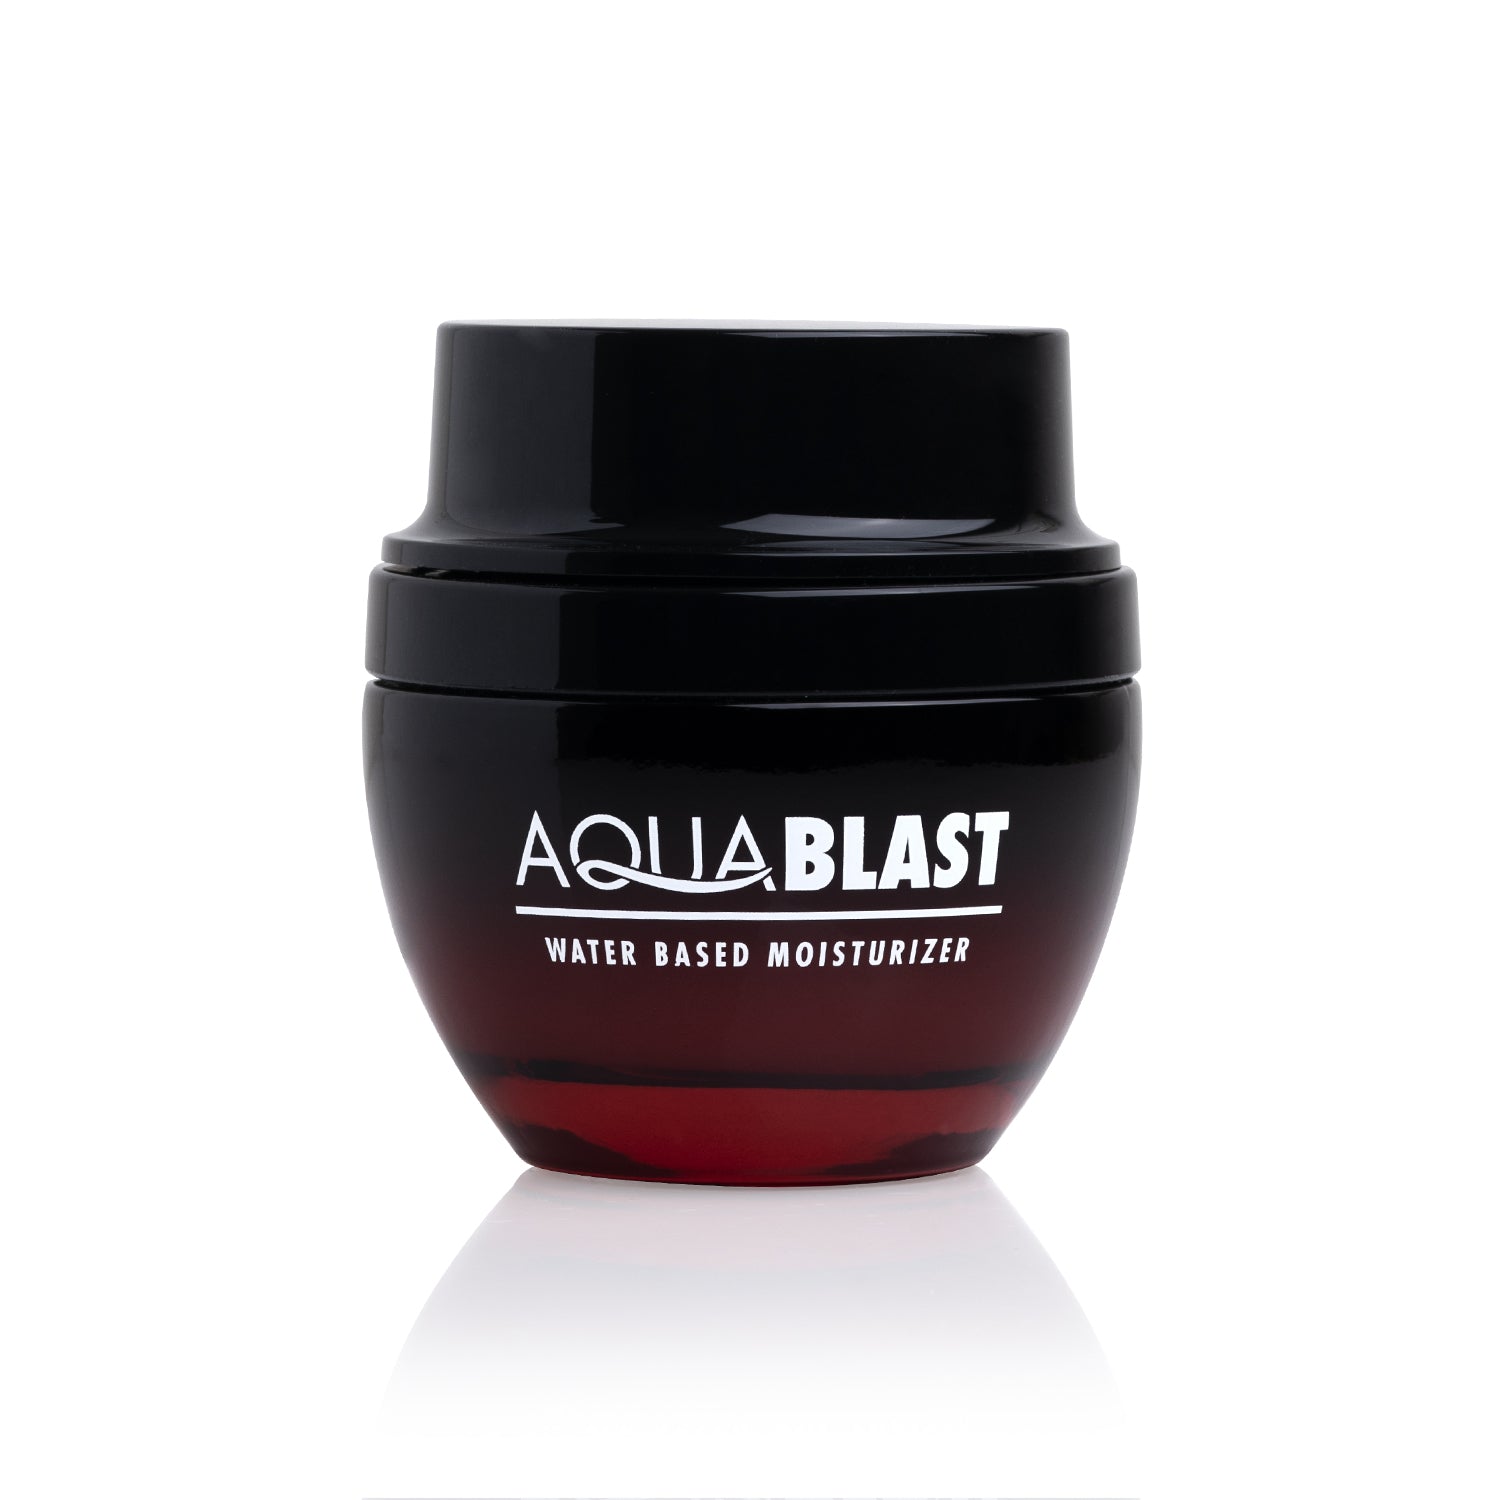 PAC Cosmetics Aqua Blast Water Based Moisturizer #Size_50 gm